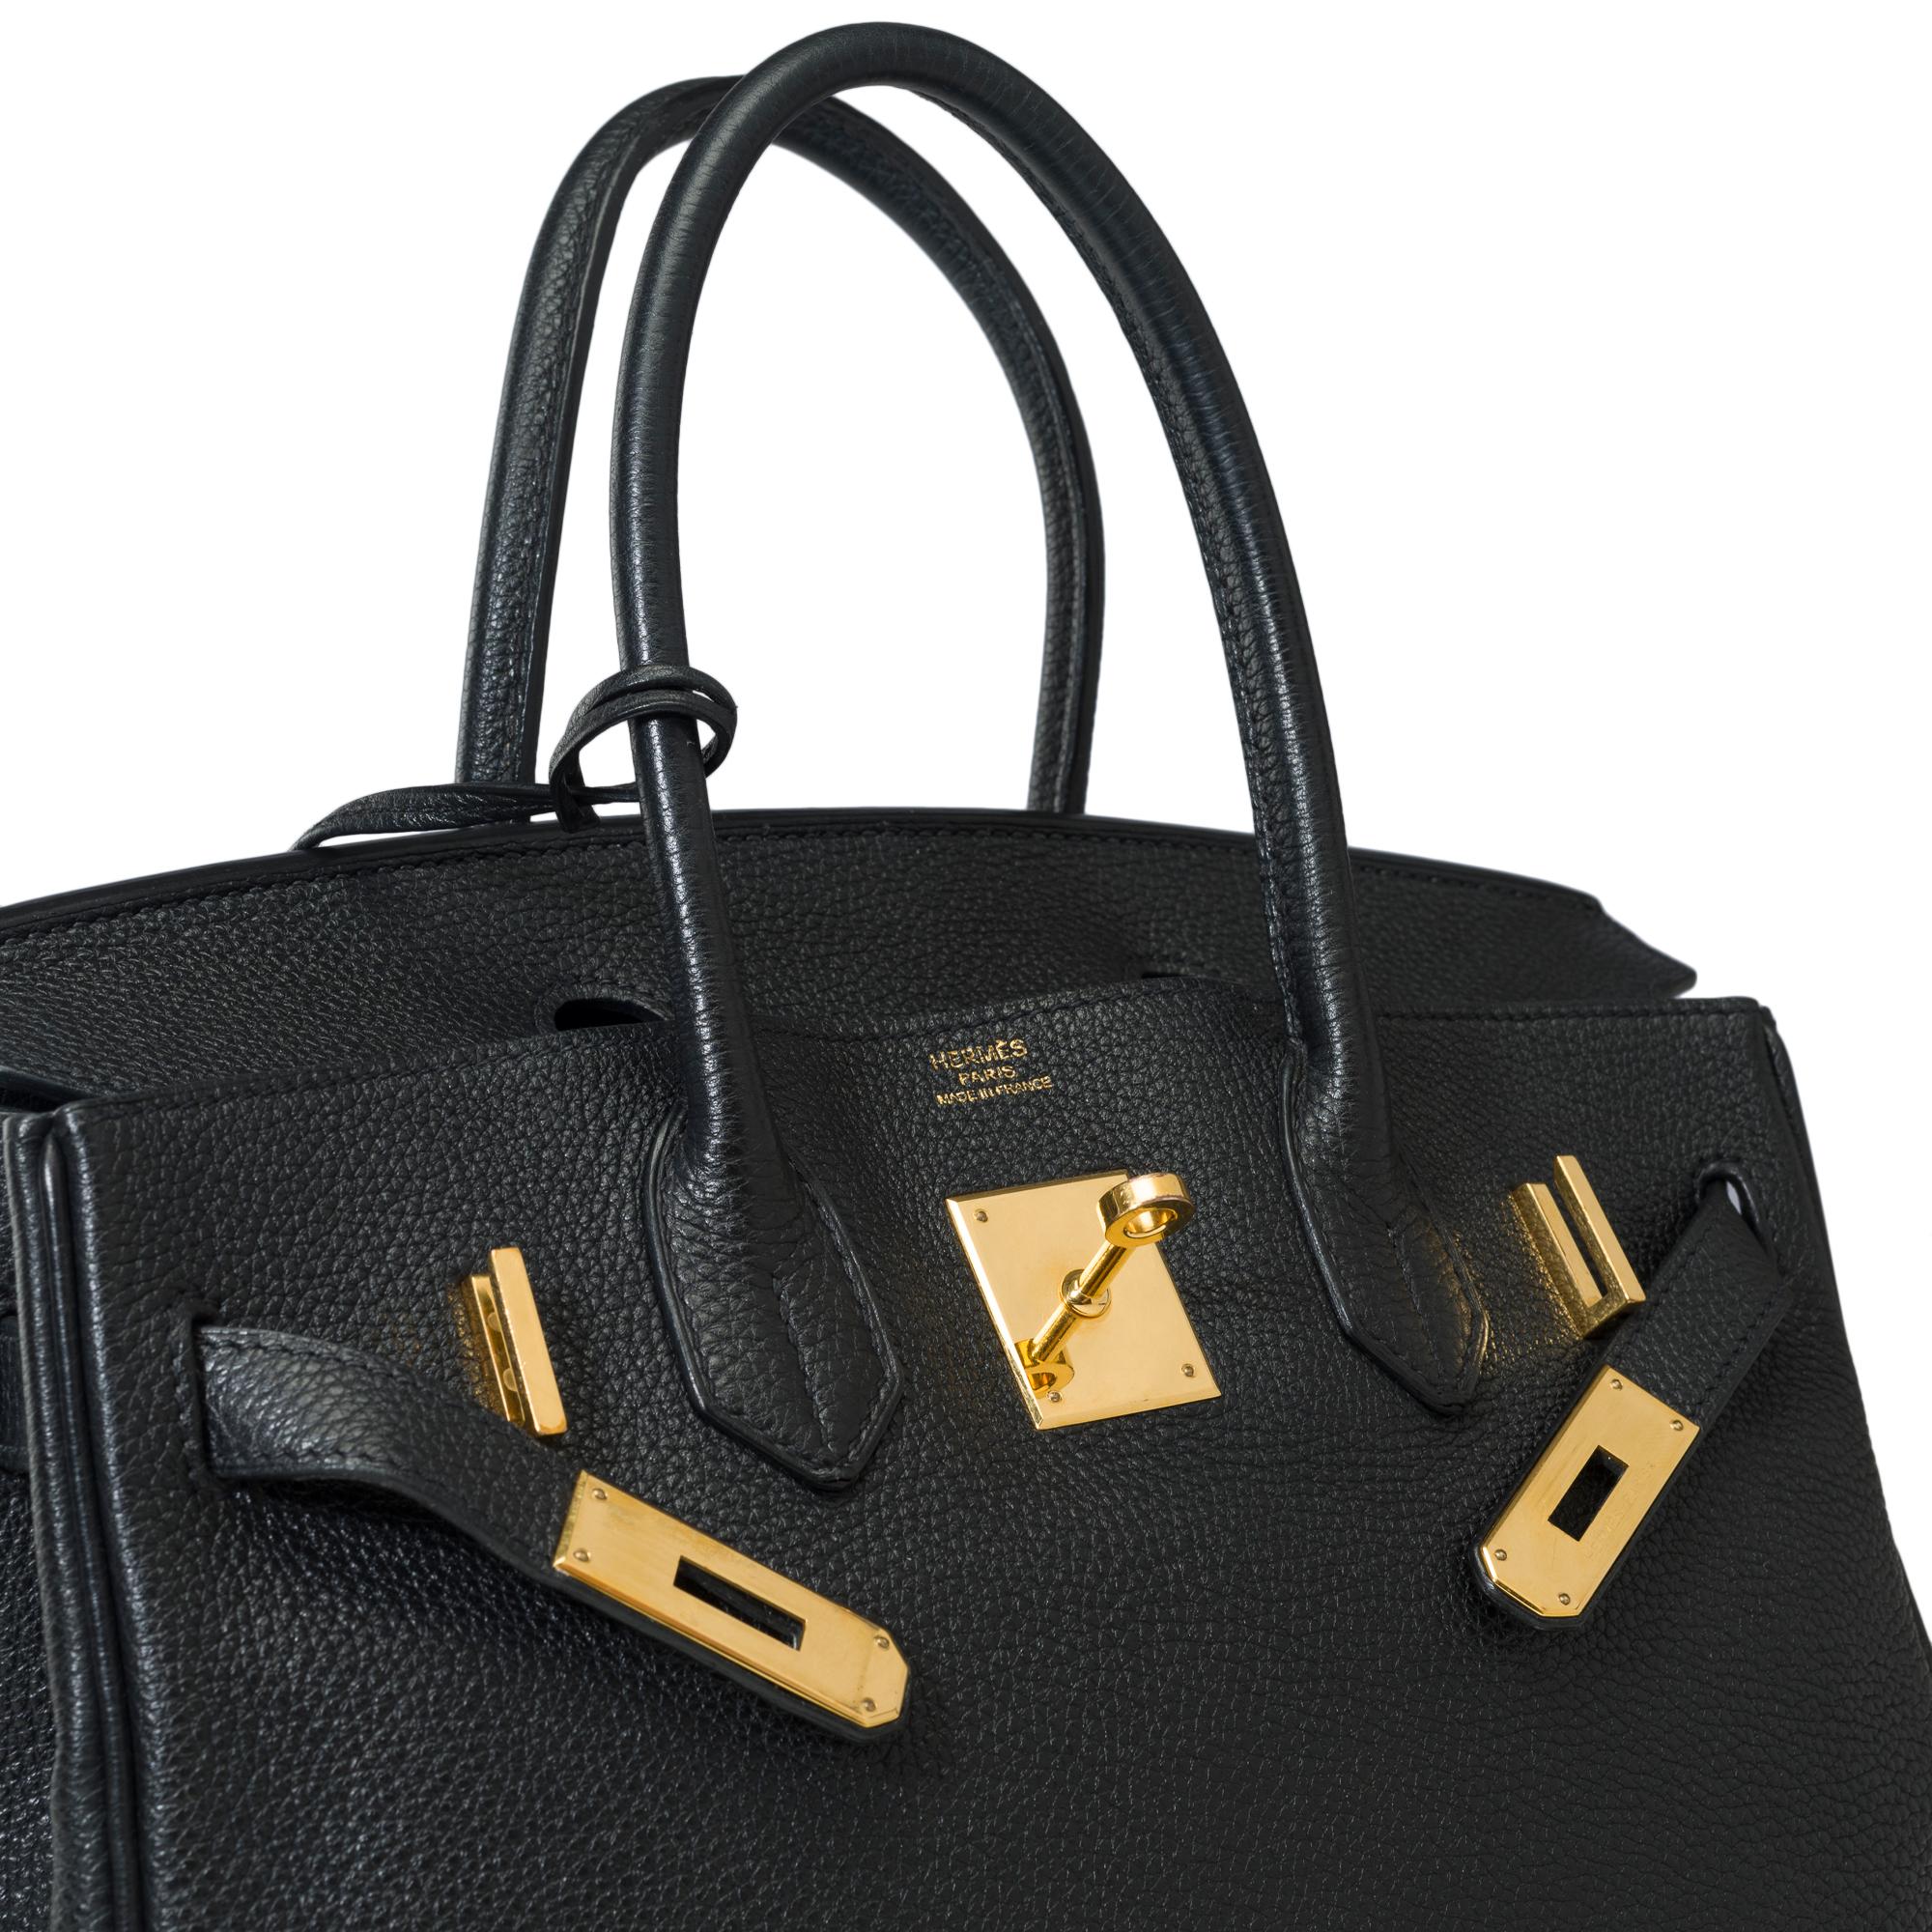 Stunning Hermes Birkin 30 handbag in Black Togo leather, GHW 4